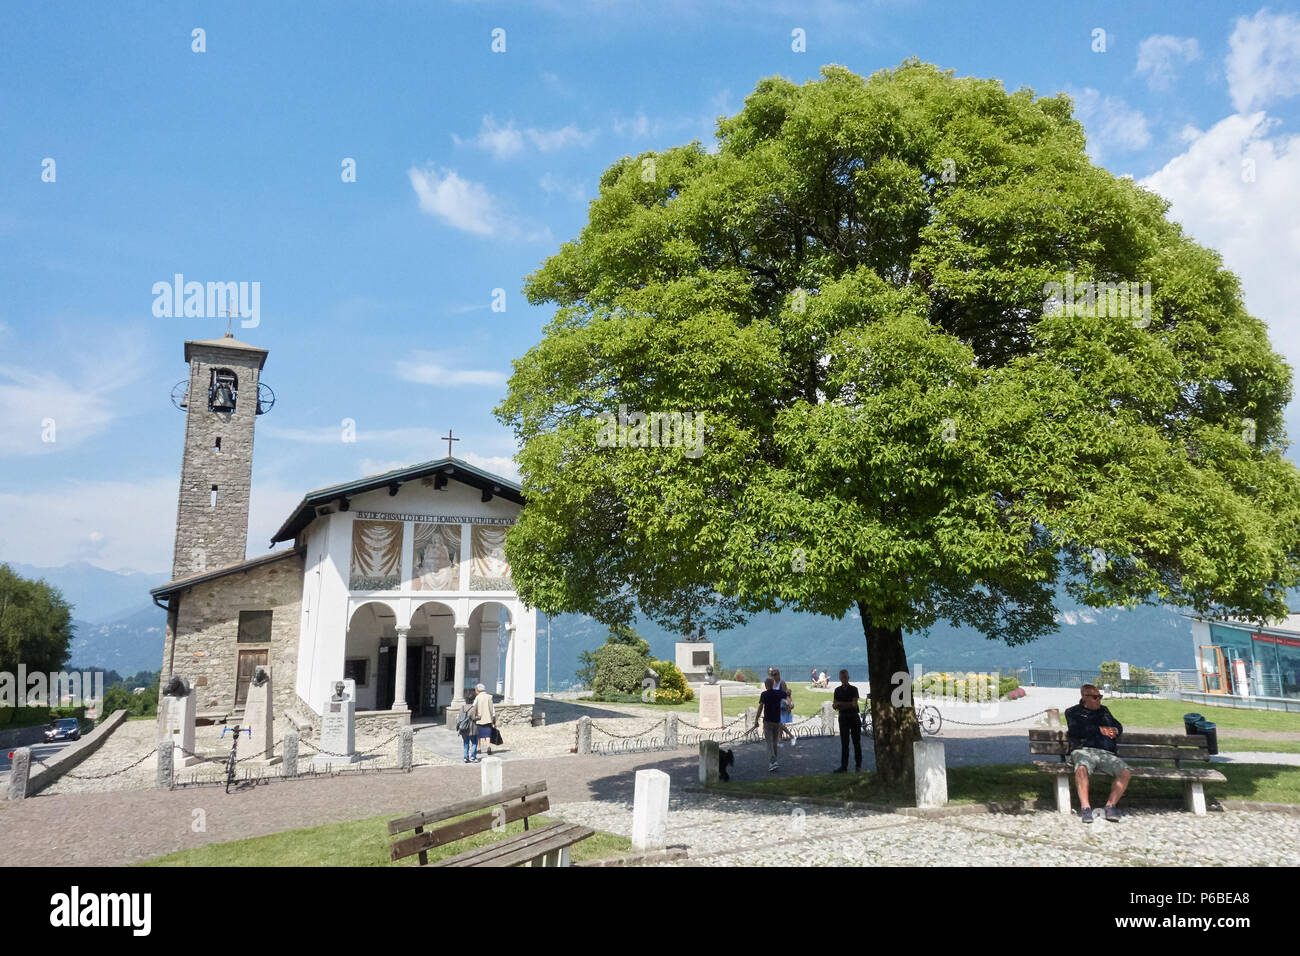 madonna di ghisallo church, Magreglio, Lake Como, Italy Stock Photo